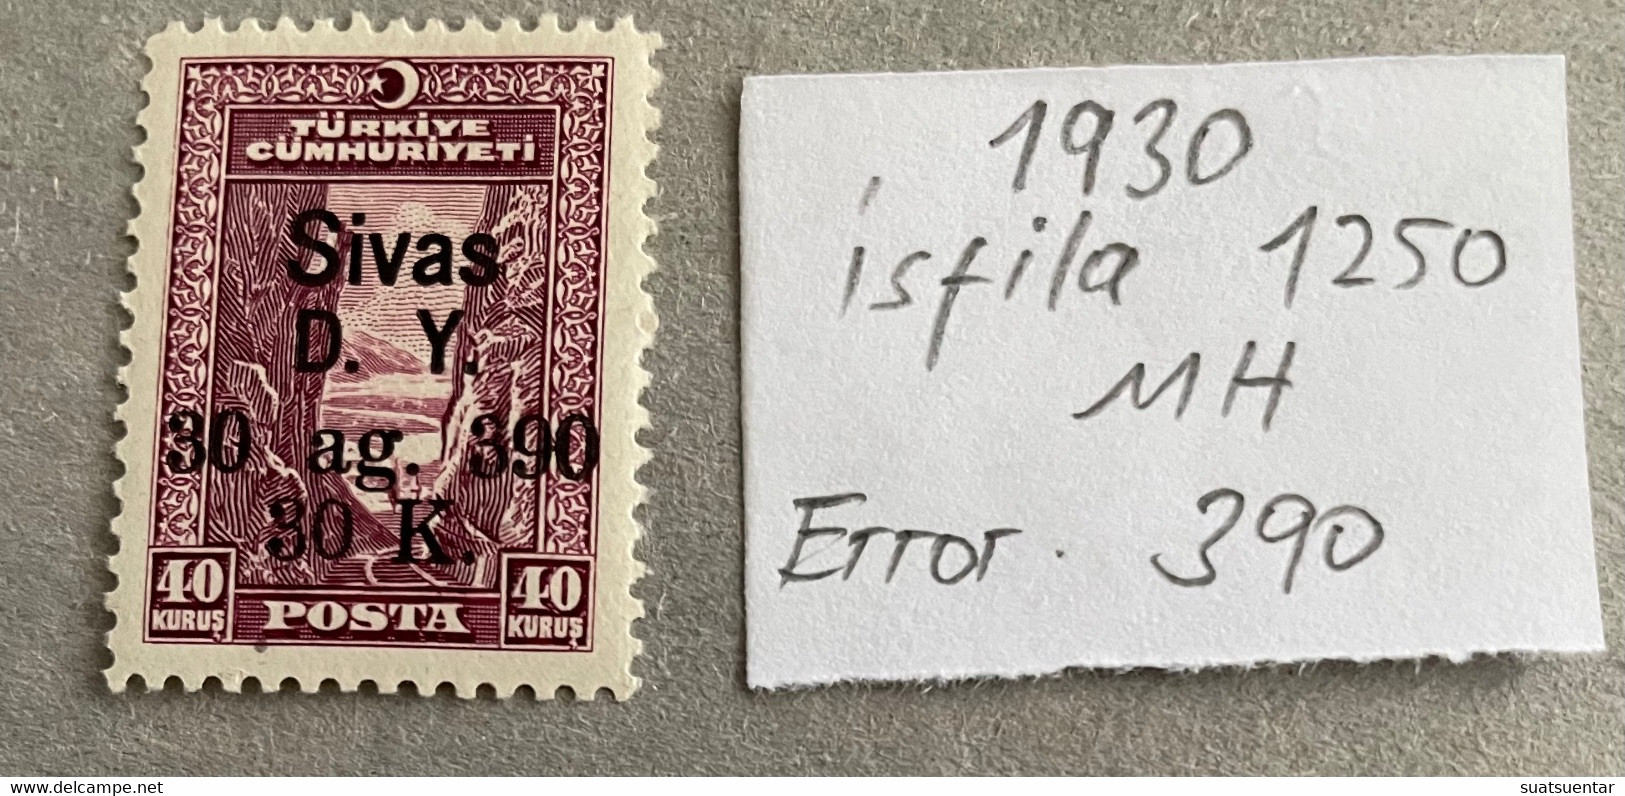 1930 Sivas-Ankara Railway Stamps Error   390 MH Isfila 1250 - Neufs